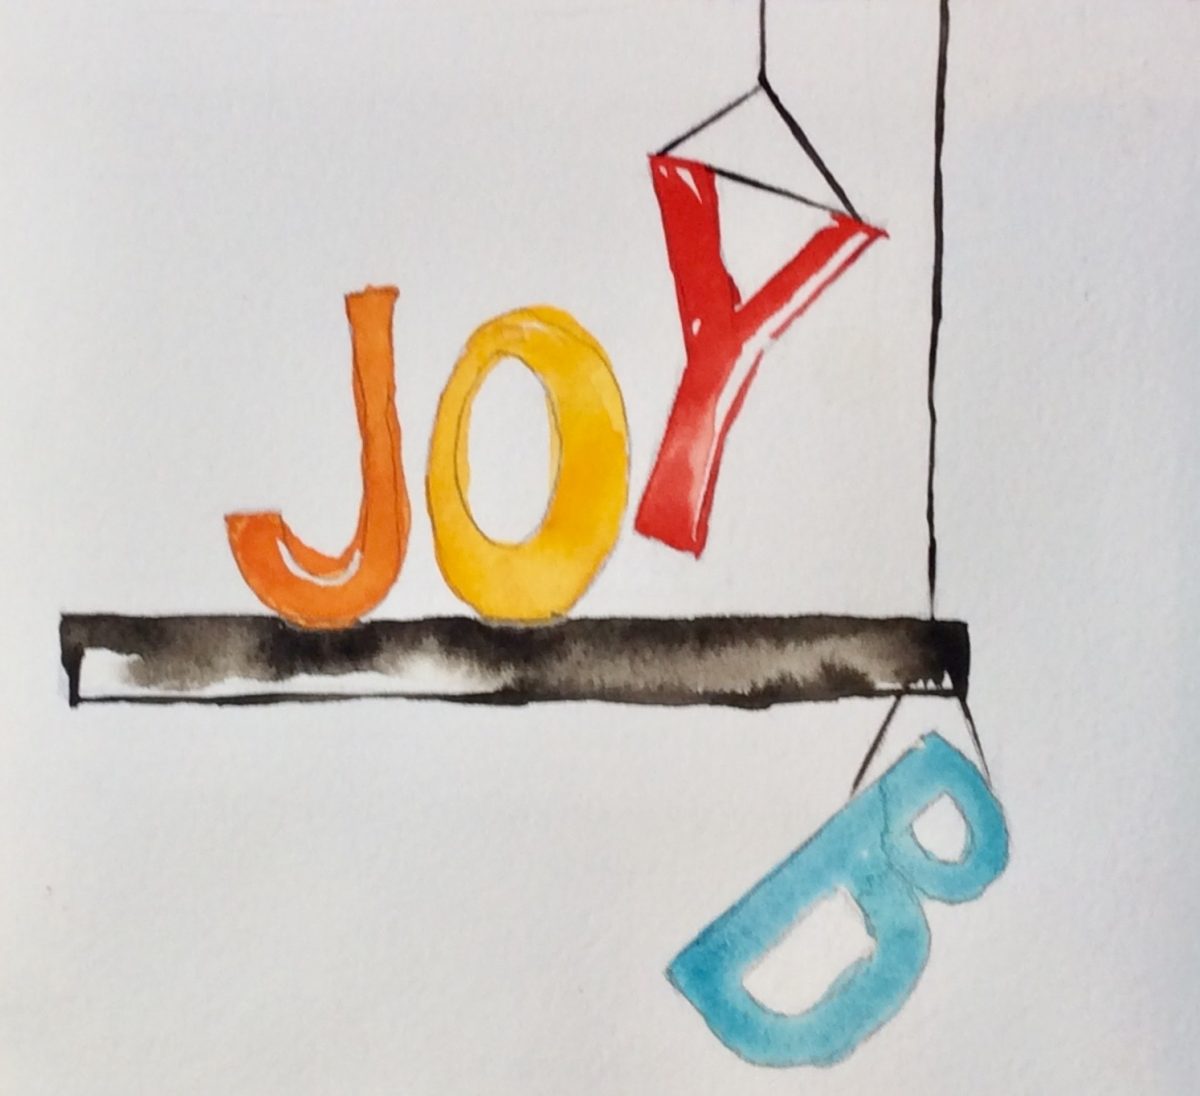 From Job to Joy